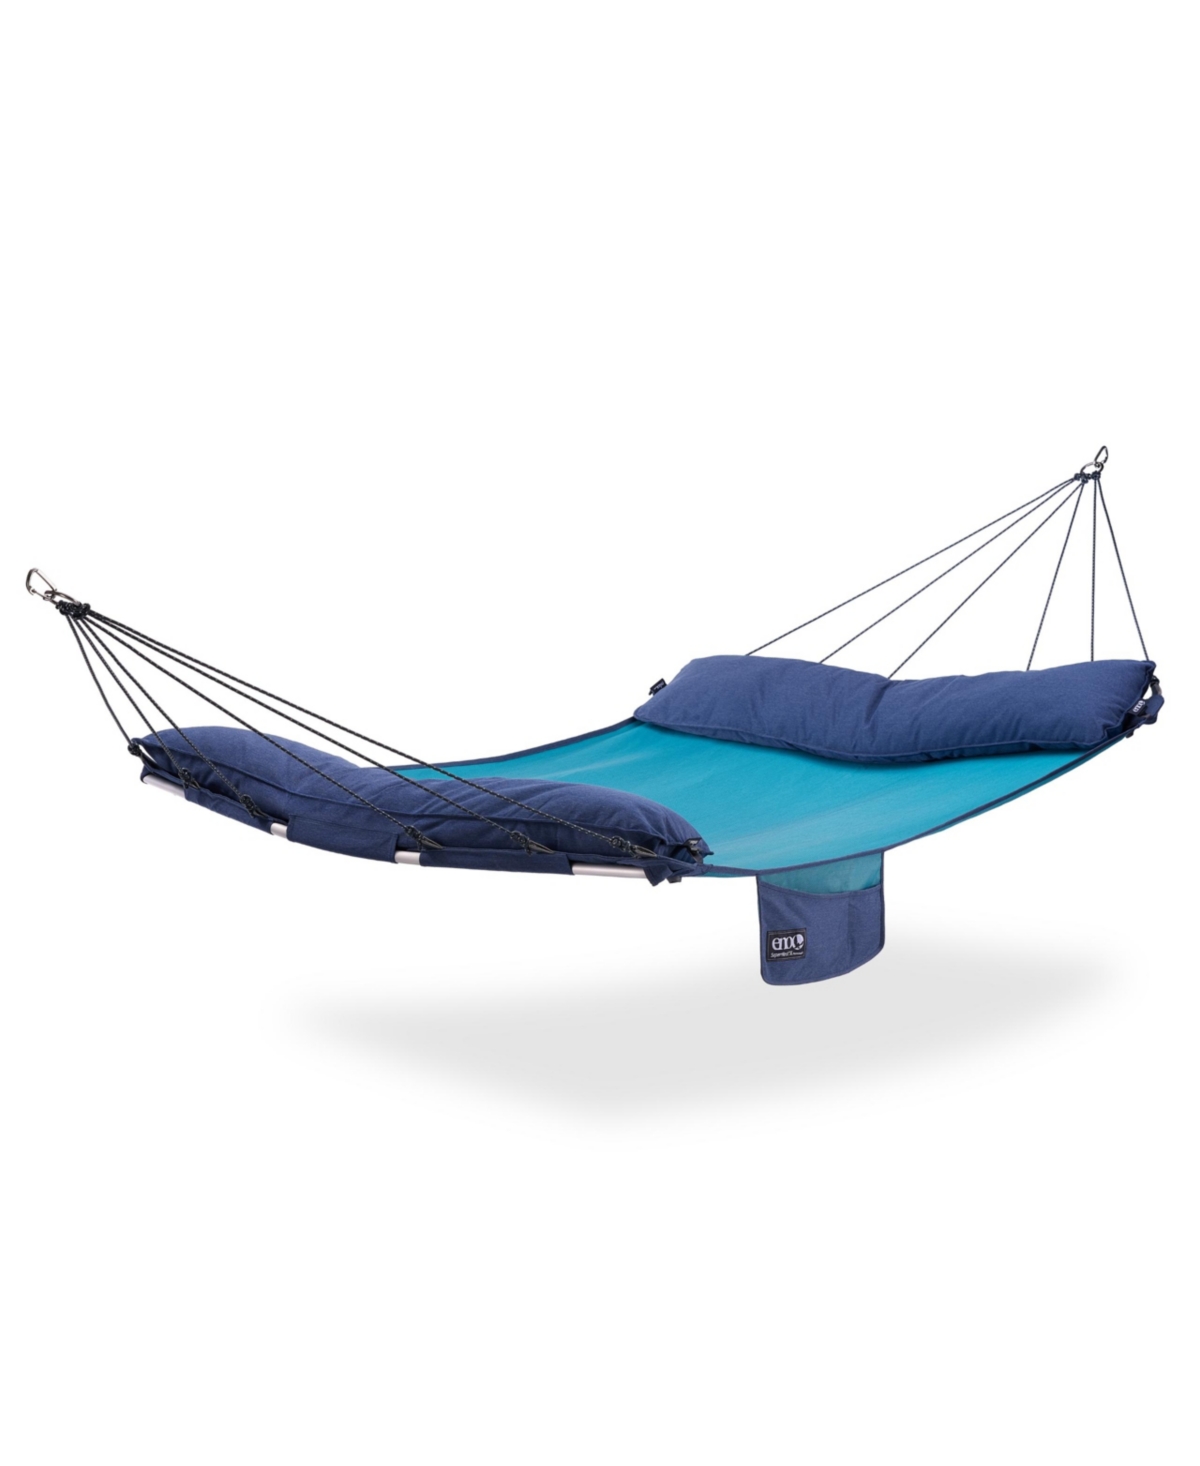 SuperNest Sl Hammock - 1 to 2 Person Backyard Hammock - Outdoor Patio Furniture for Backyard, Lawn, or Balcony - Coastal Blue - Coastal Blue